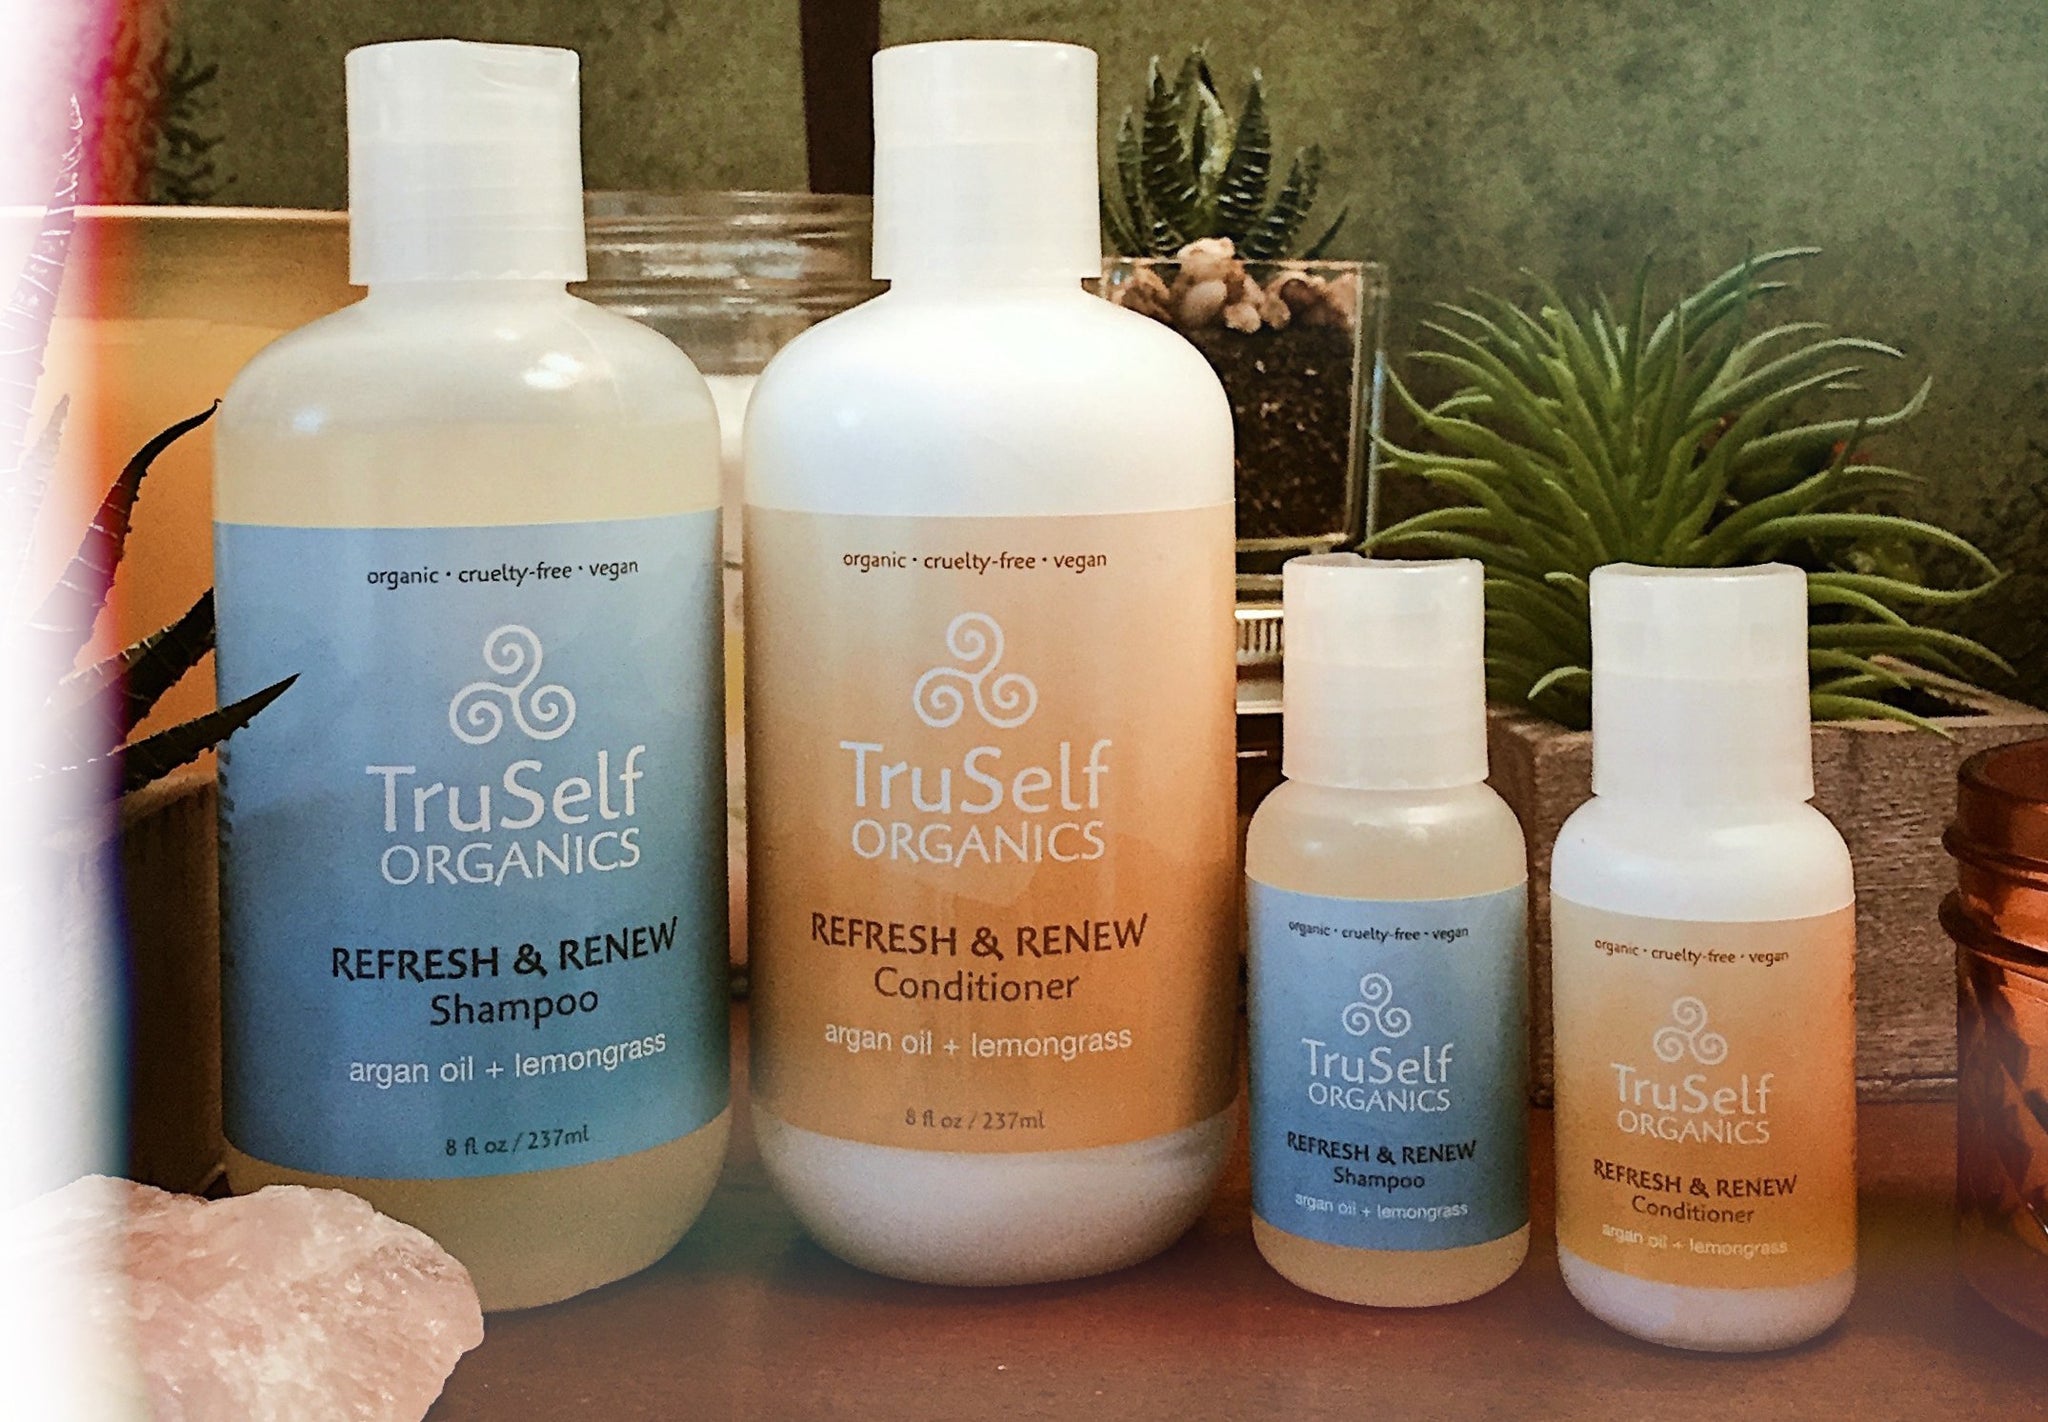 truself organics shampoo and conditioner travel sizes